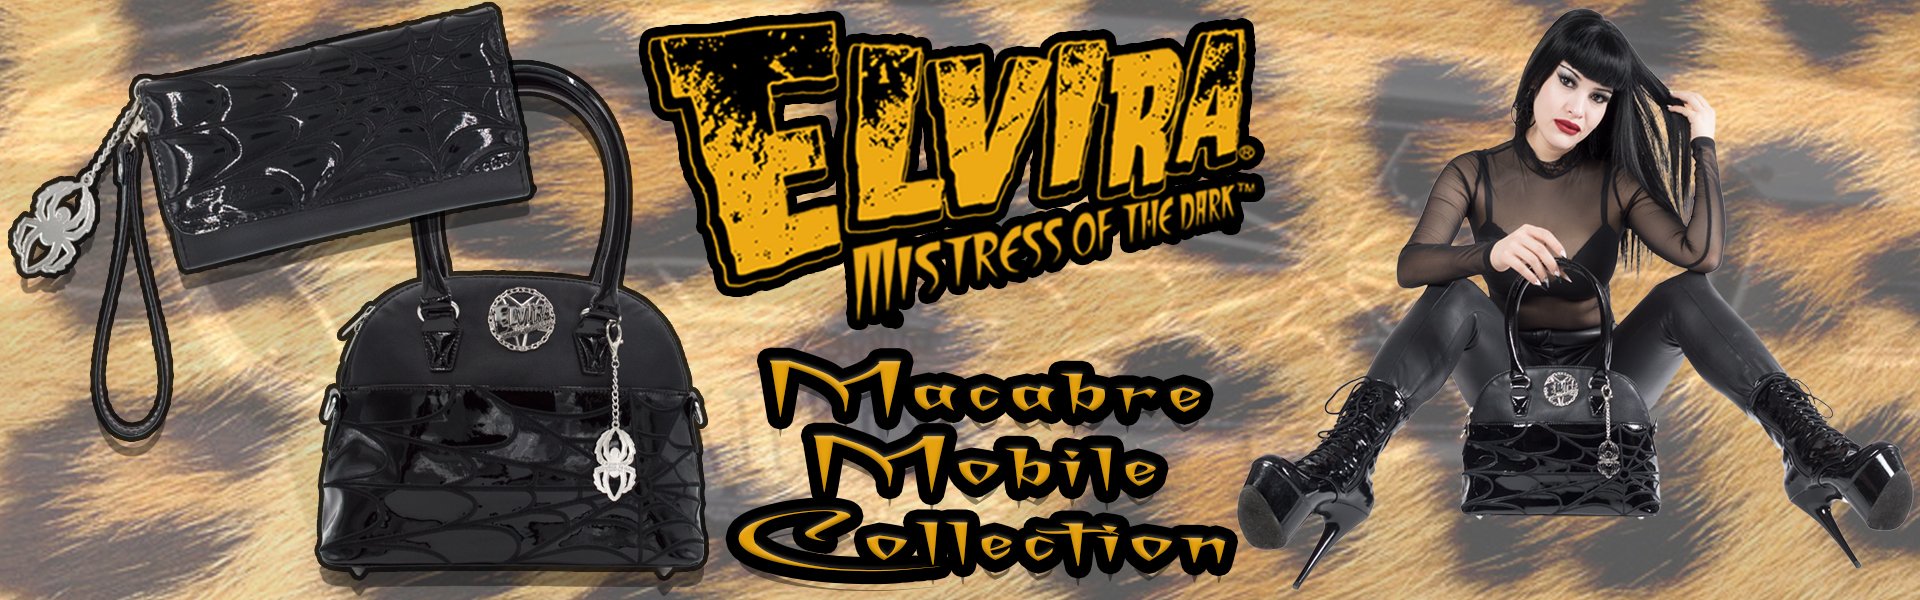 Official Elvira Mistress of the Dark Merchandise at Nerd Imports